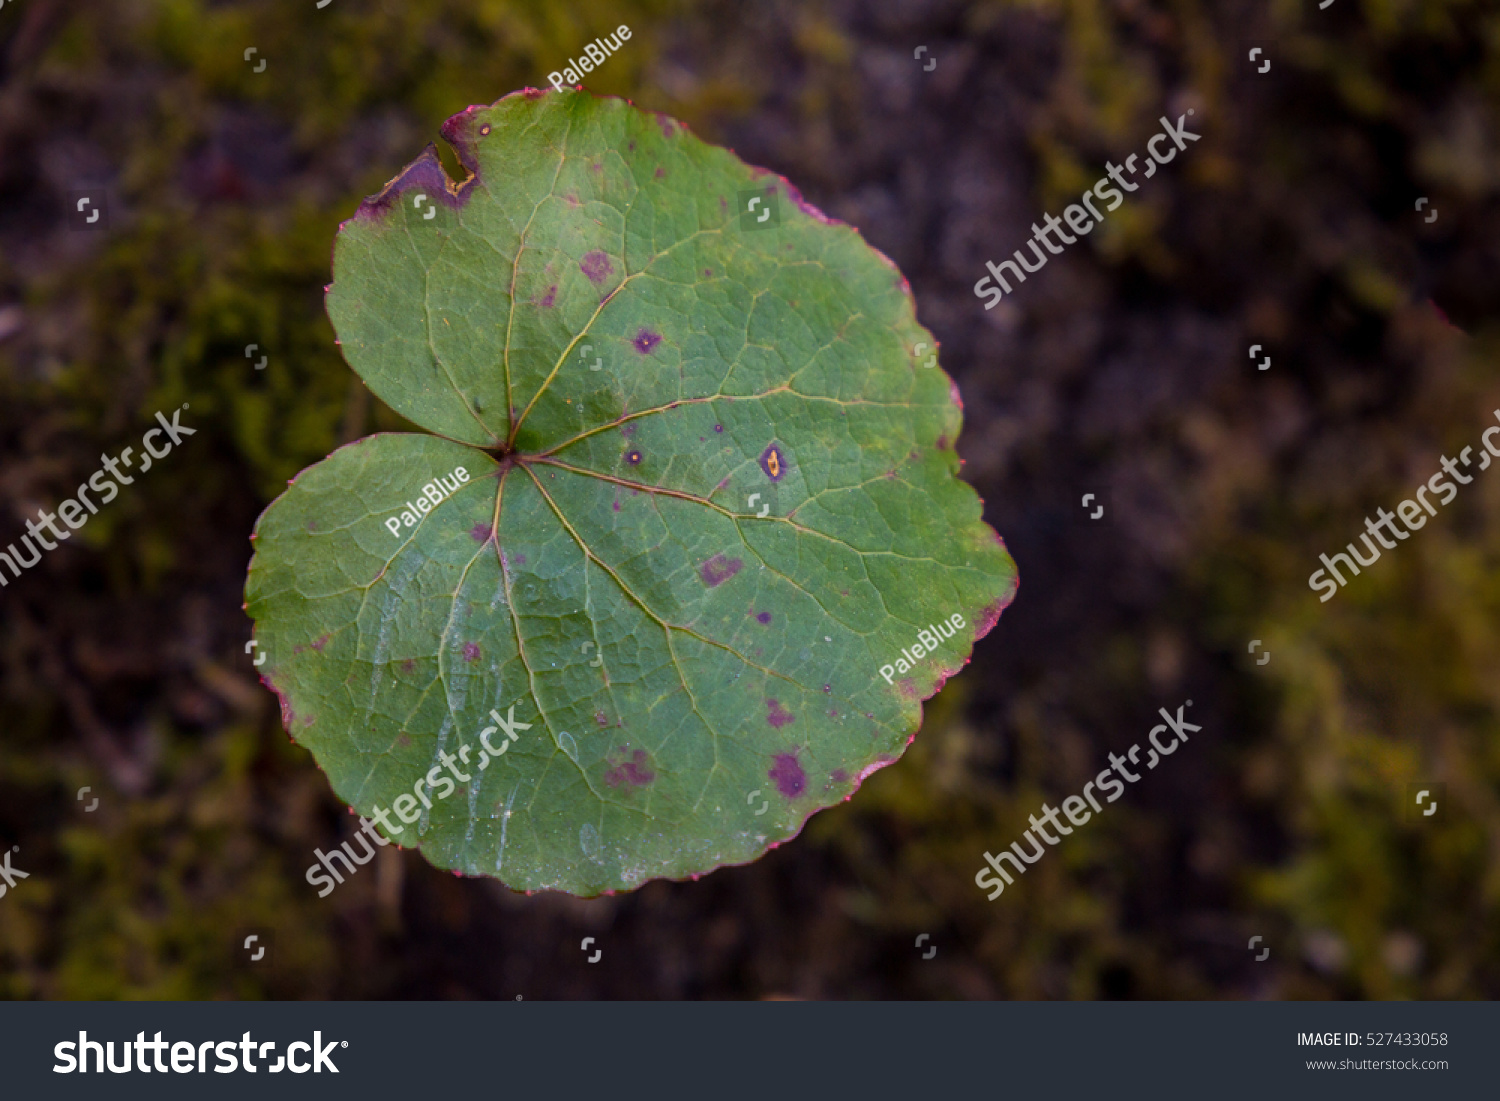 Single Galax Leaf with purple spots on de-focused ground #527433058